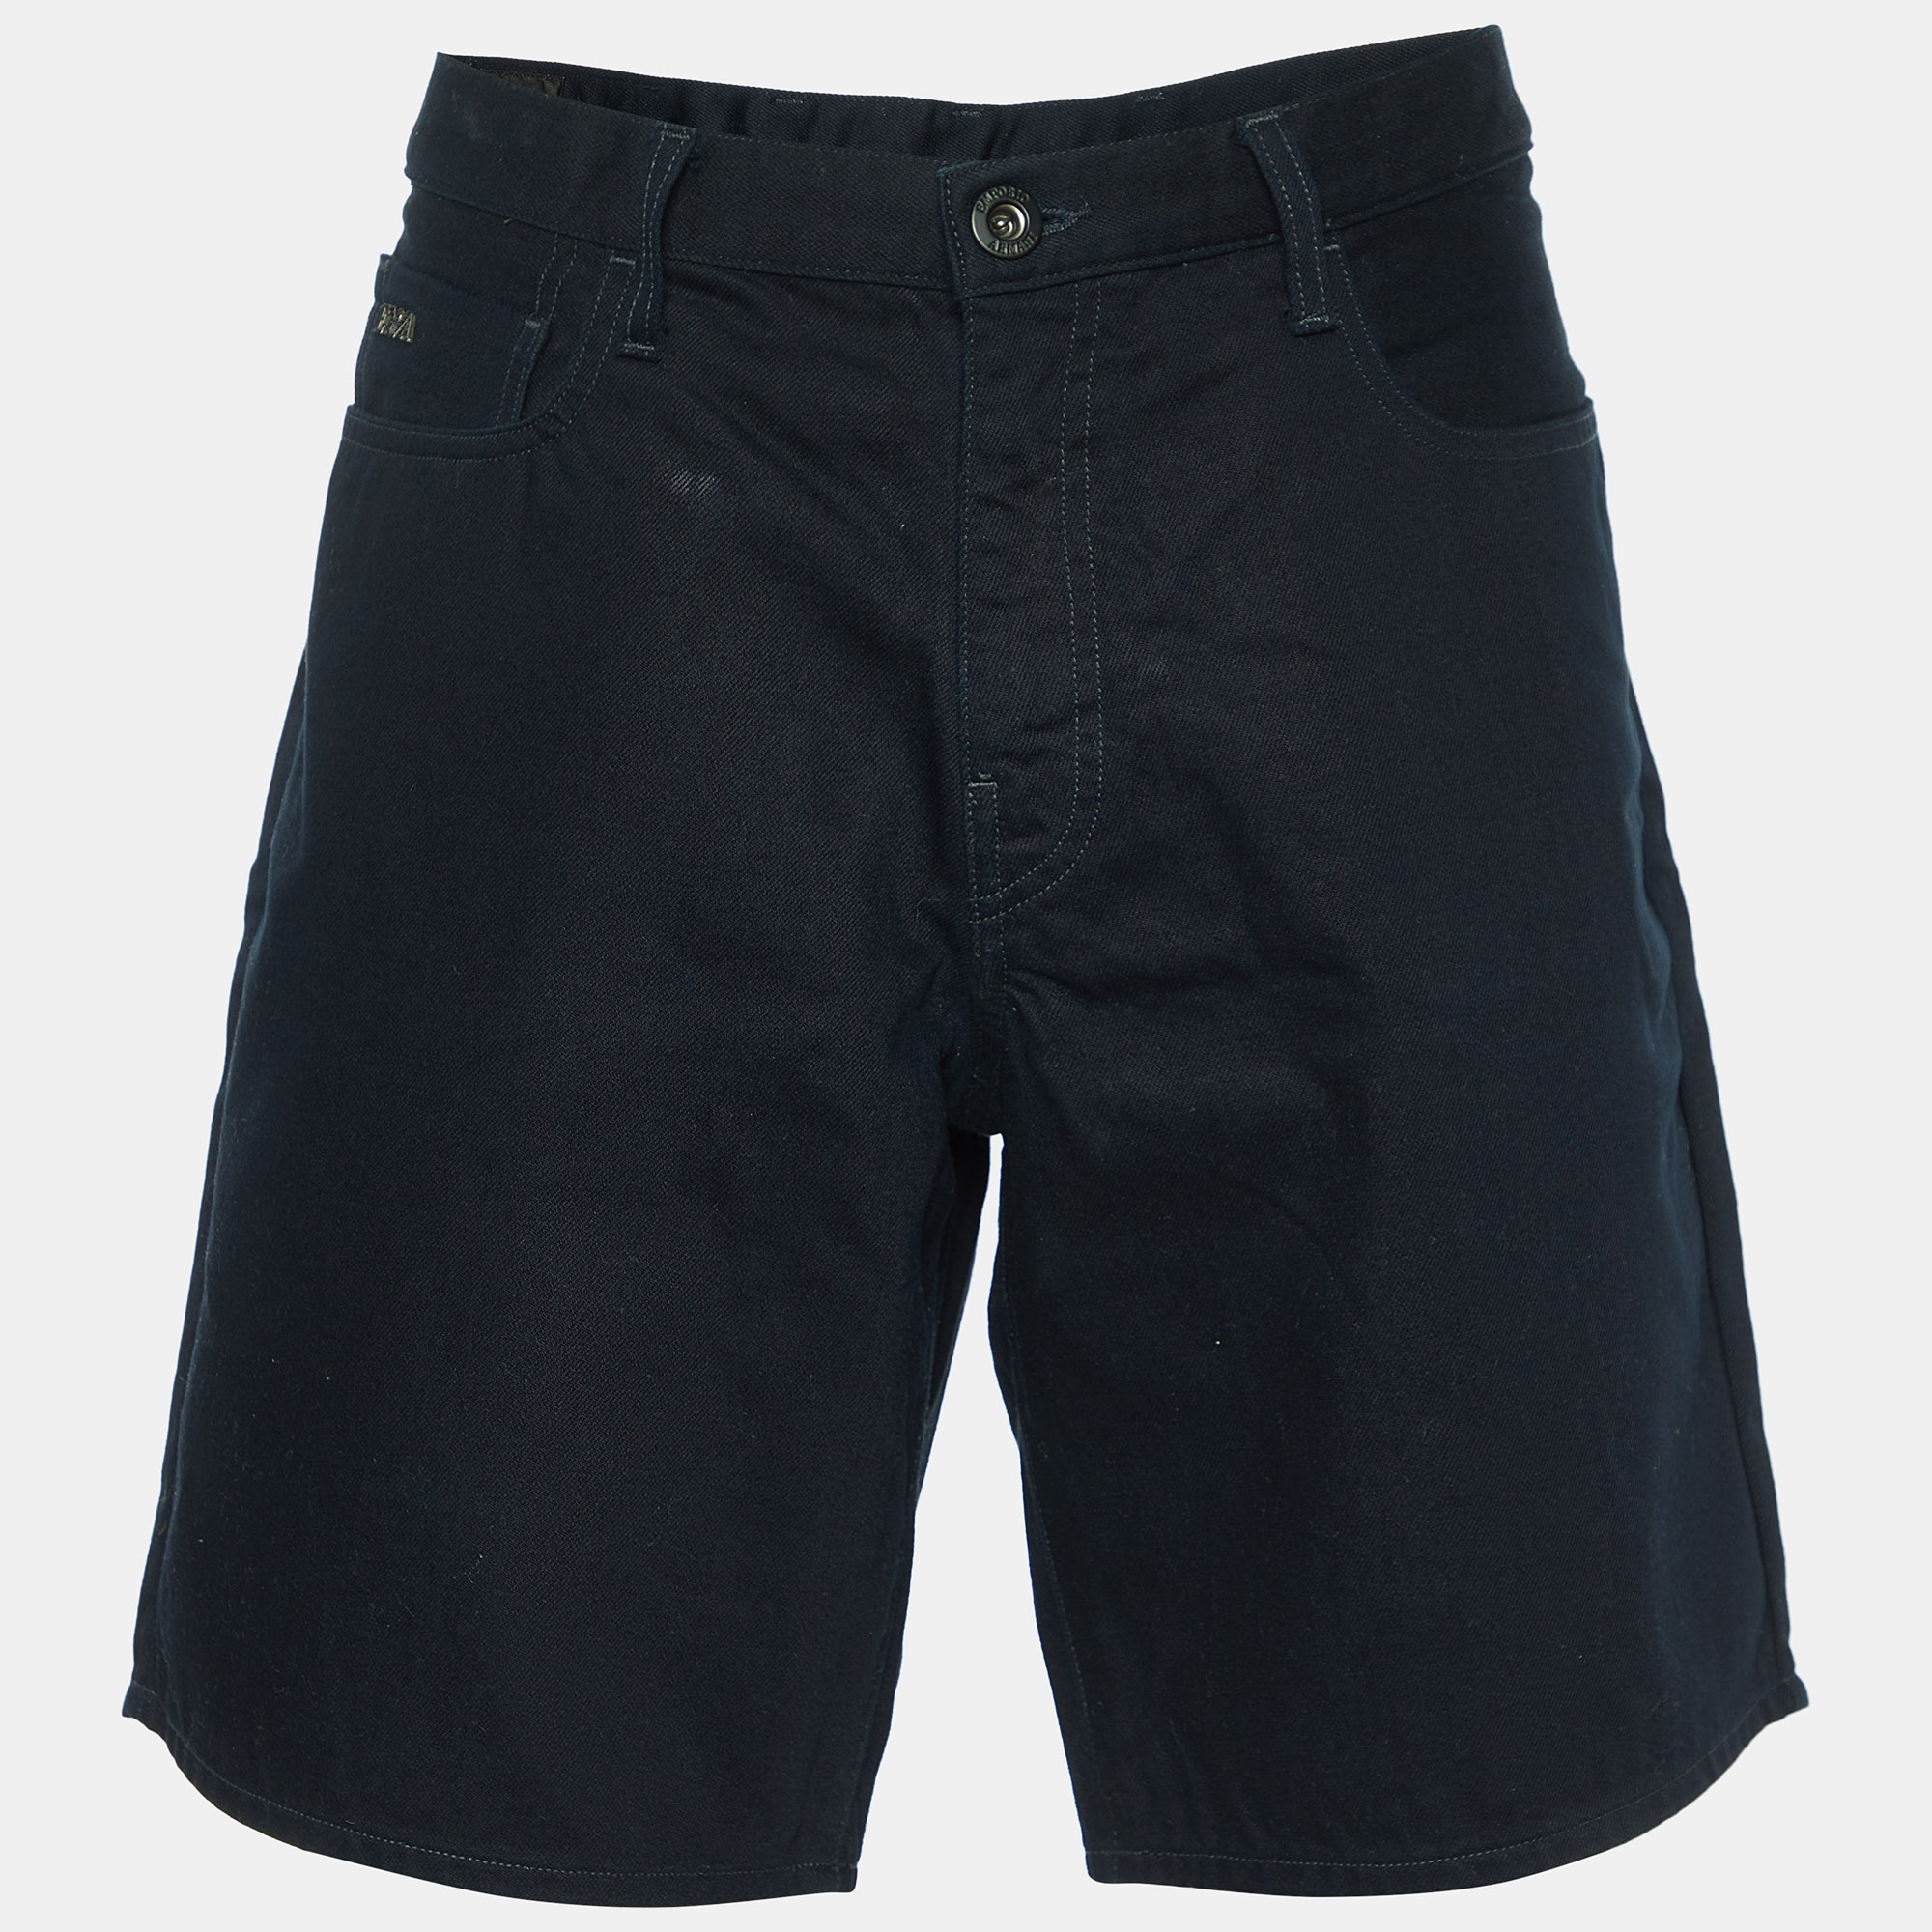 Emporio armani black cotton denim shorts xl/waist 38"